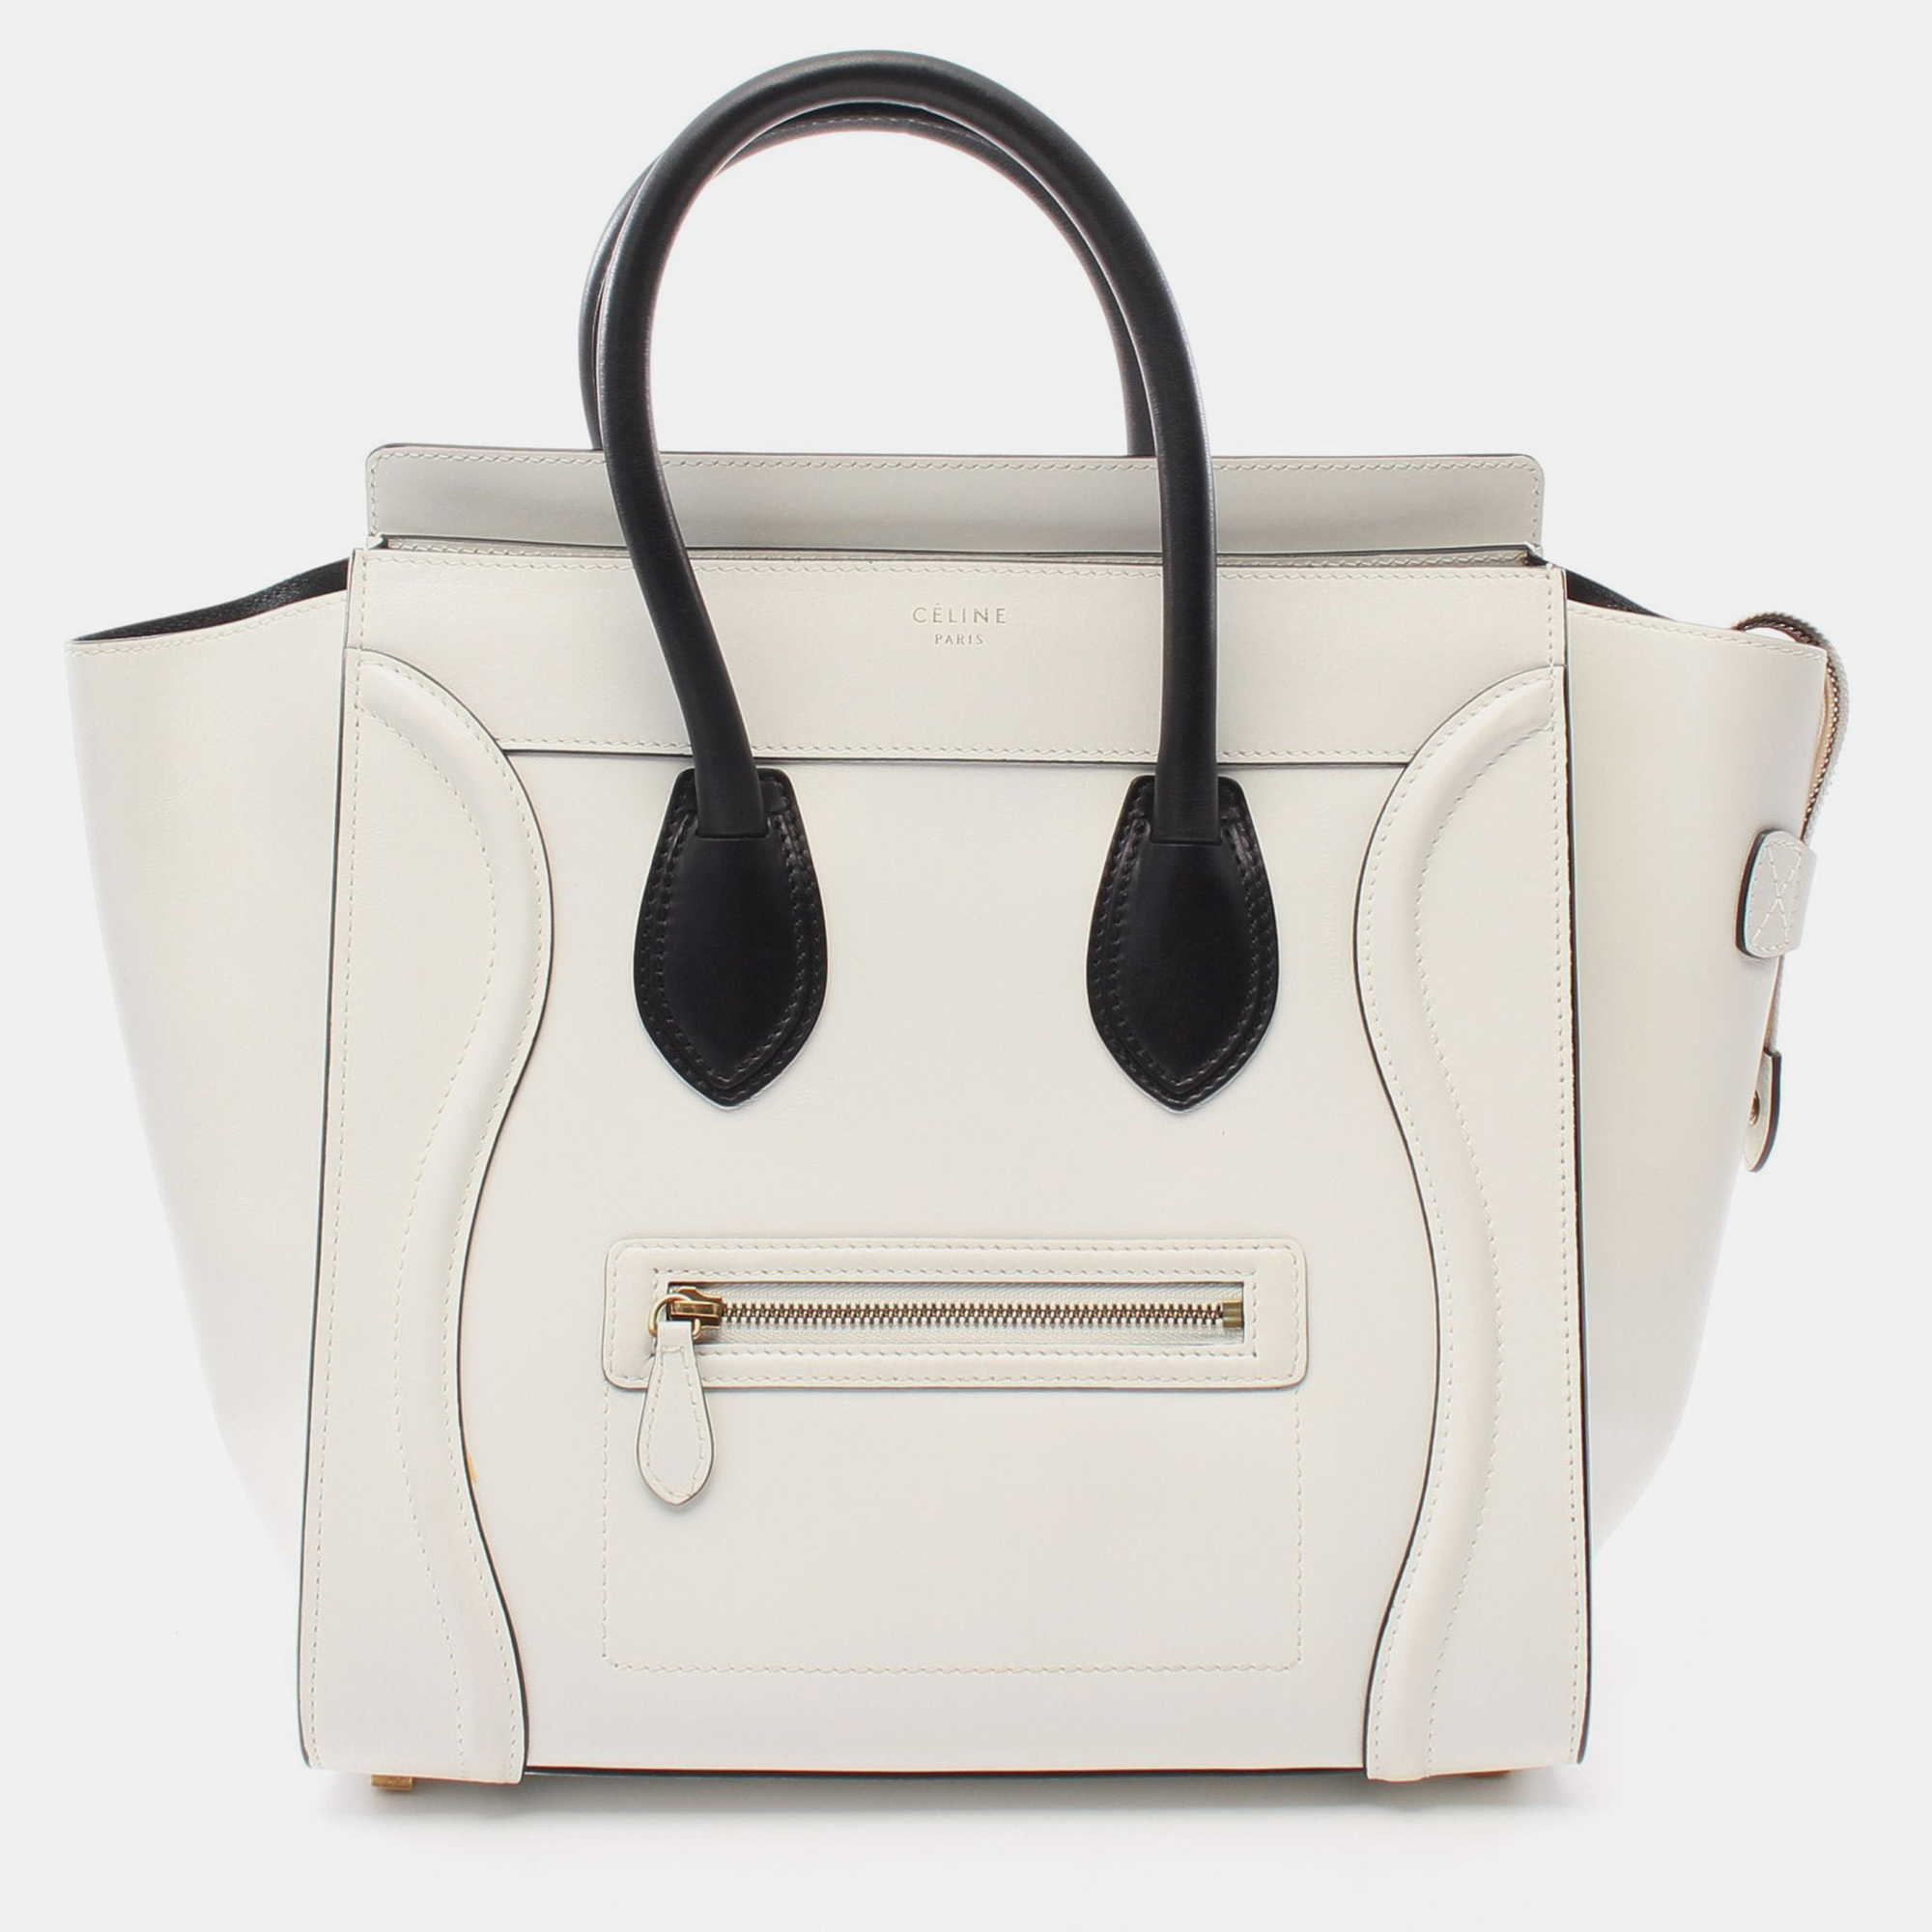 Celine luggage mini shopper handbag leather white black